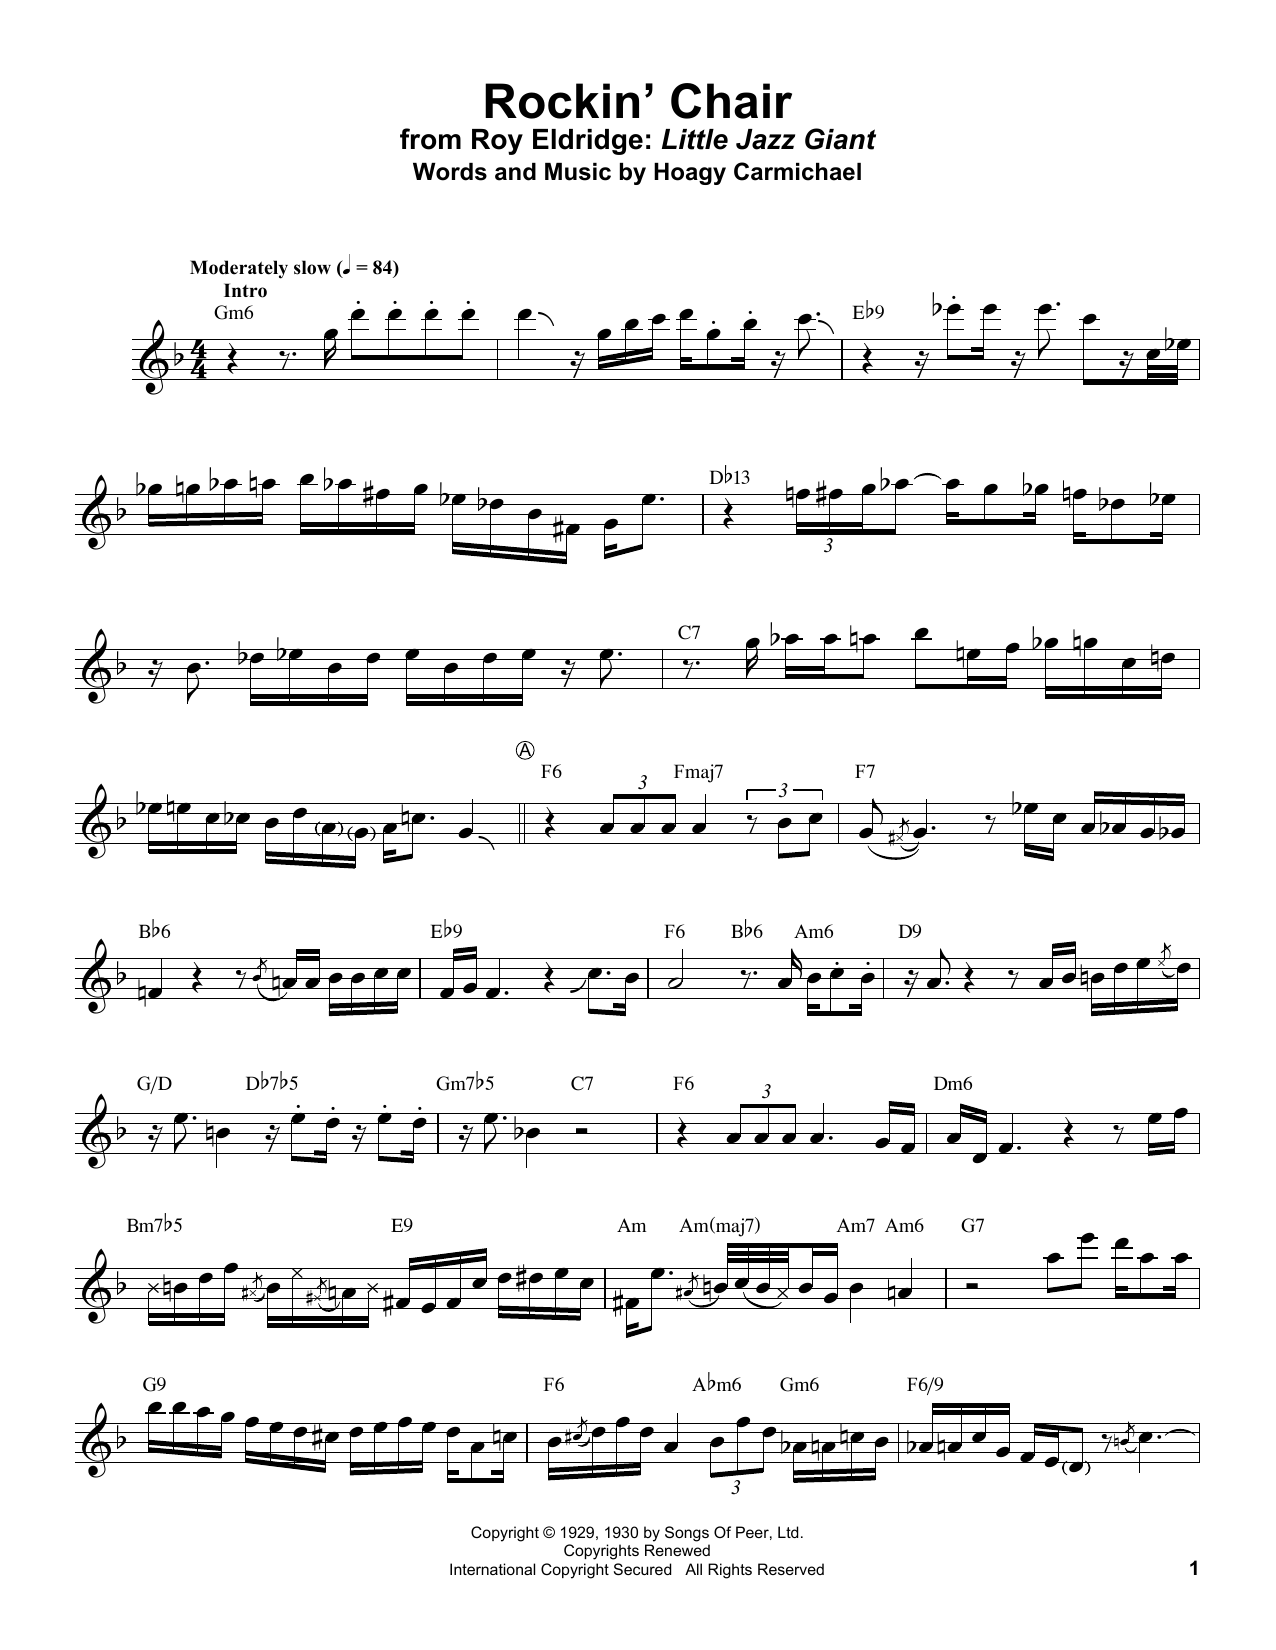 Roy Eldridge Rockin' Chair Sheet Music Notes & Chords for Trumpet Transcription - Download or Print PDF